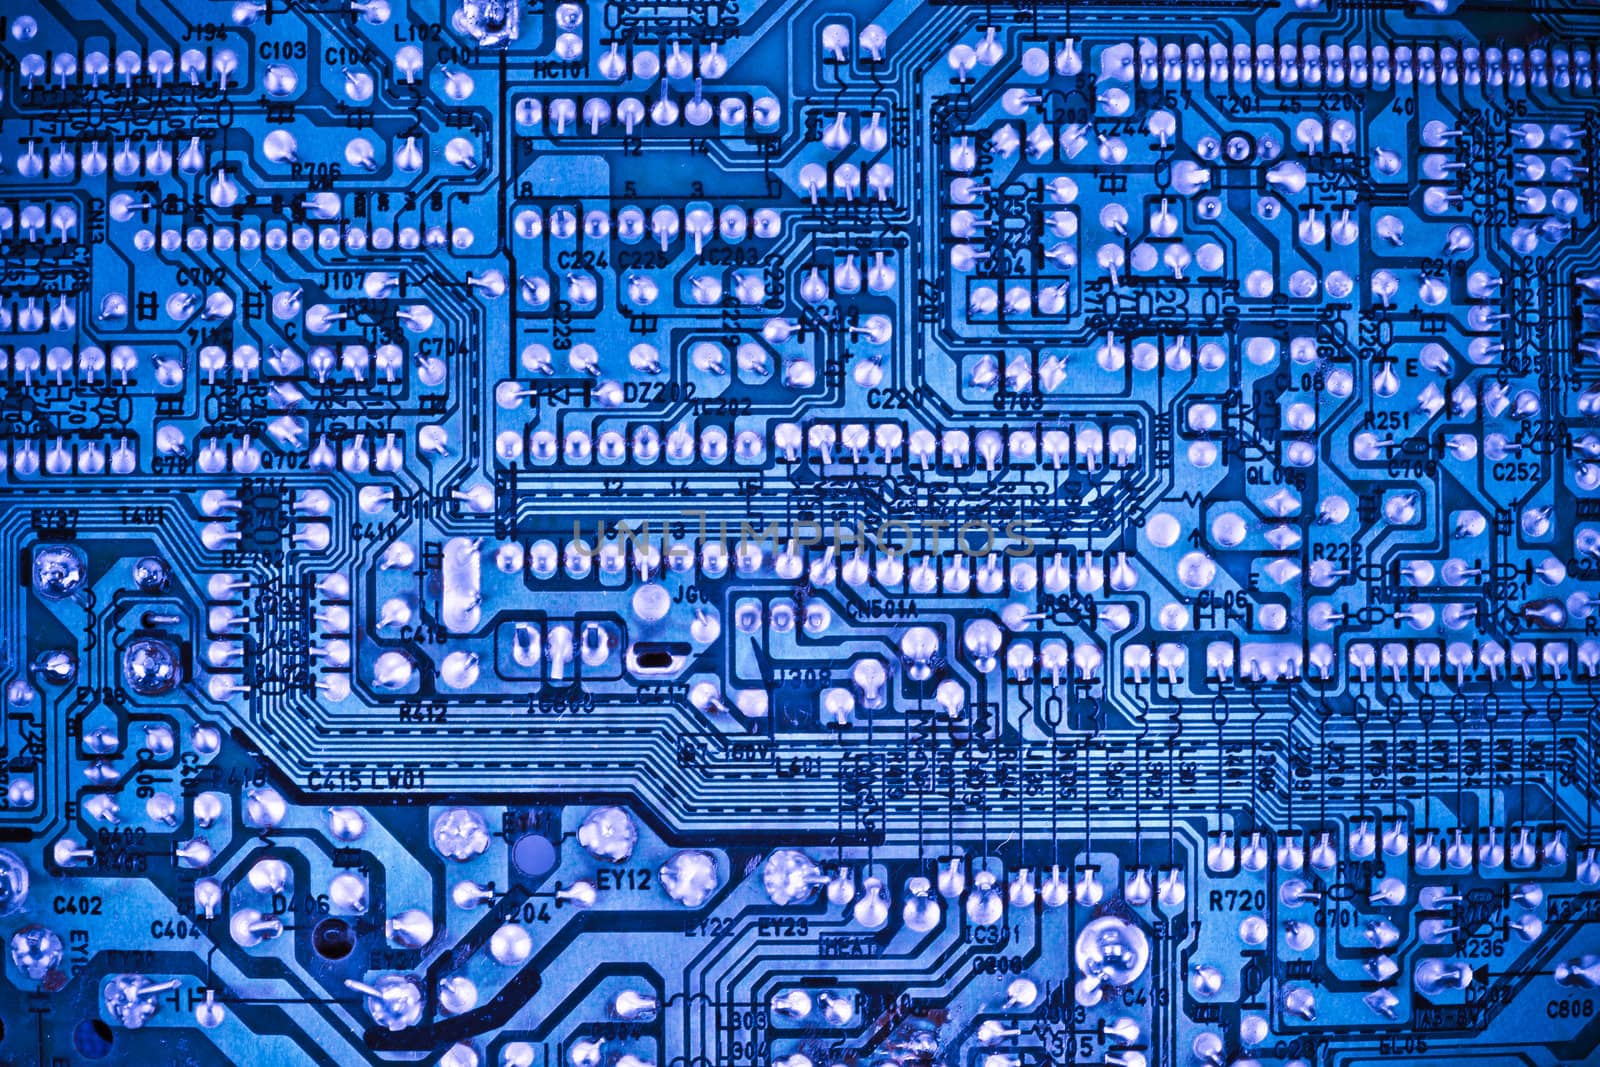 closeup of the blue electronic circuit board